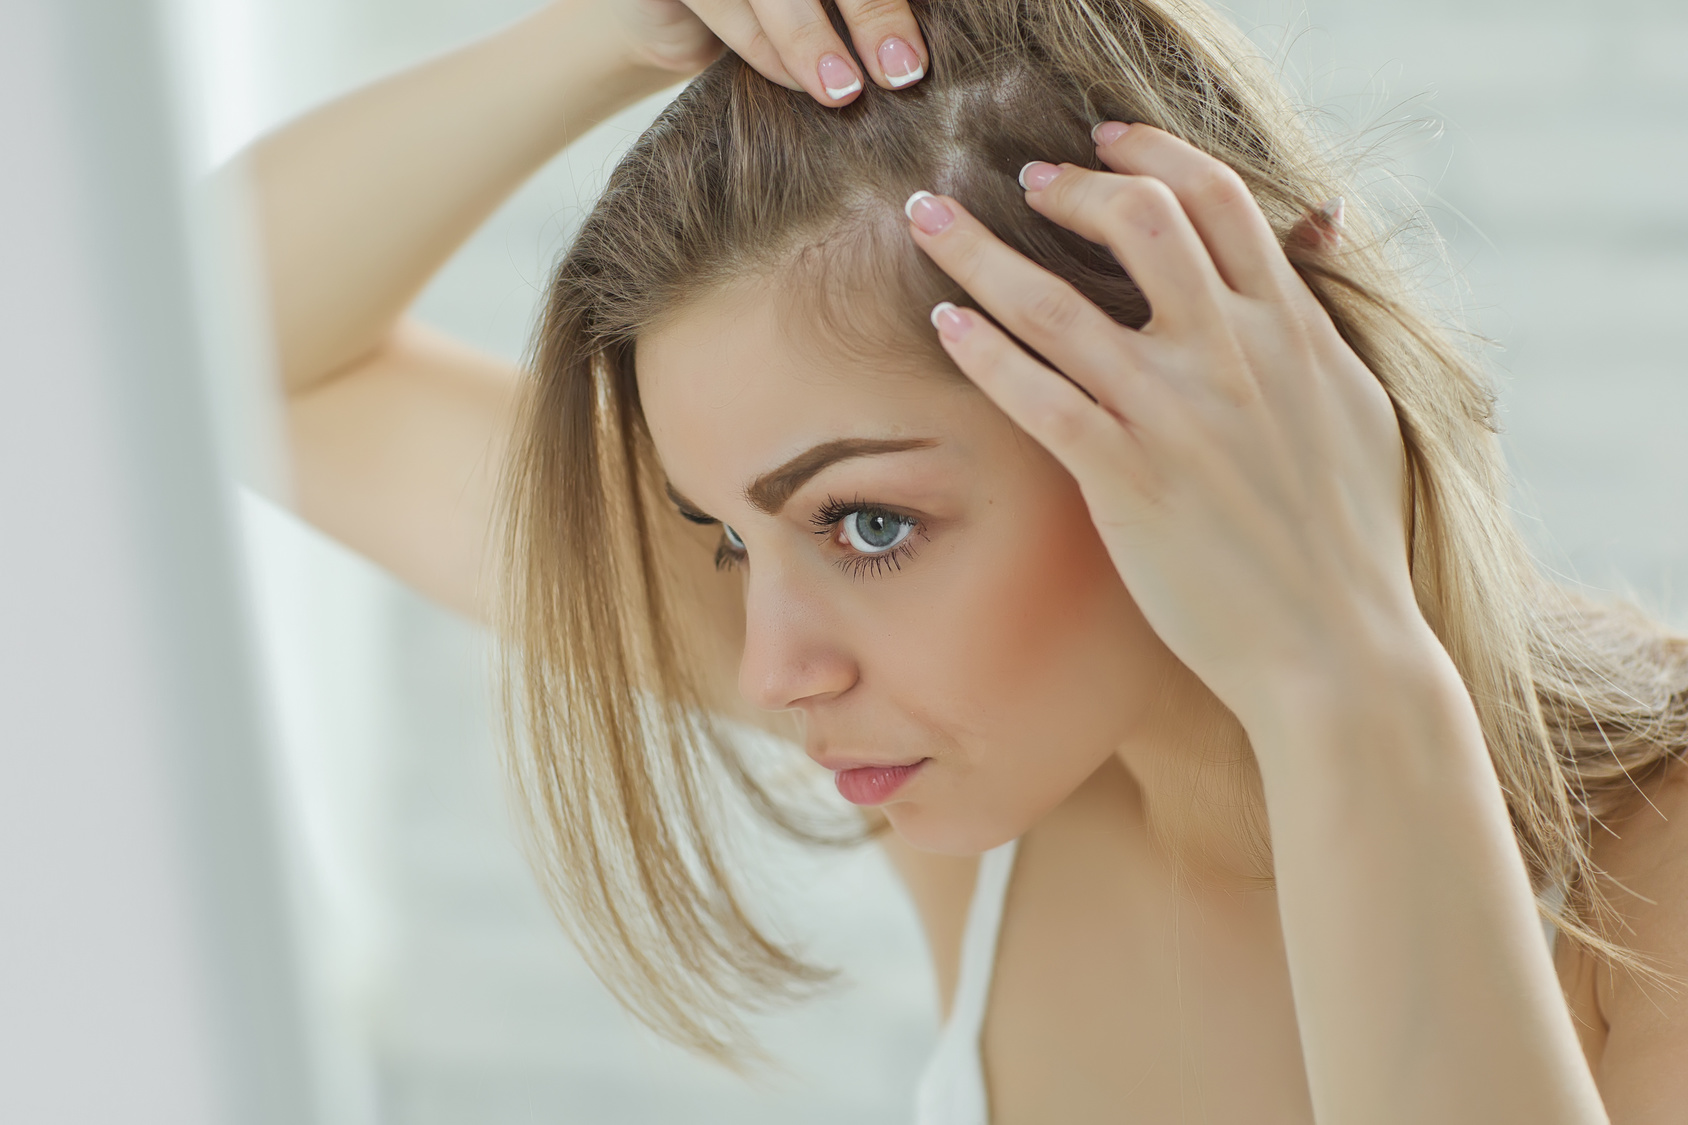 Stress due to coronavirus causes hair loss #1